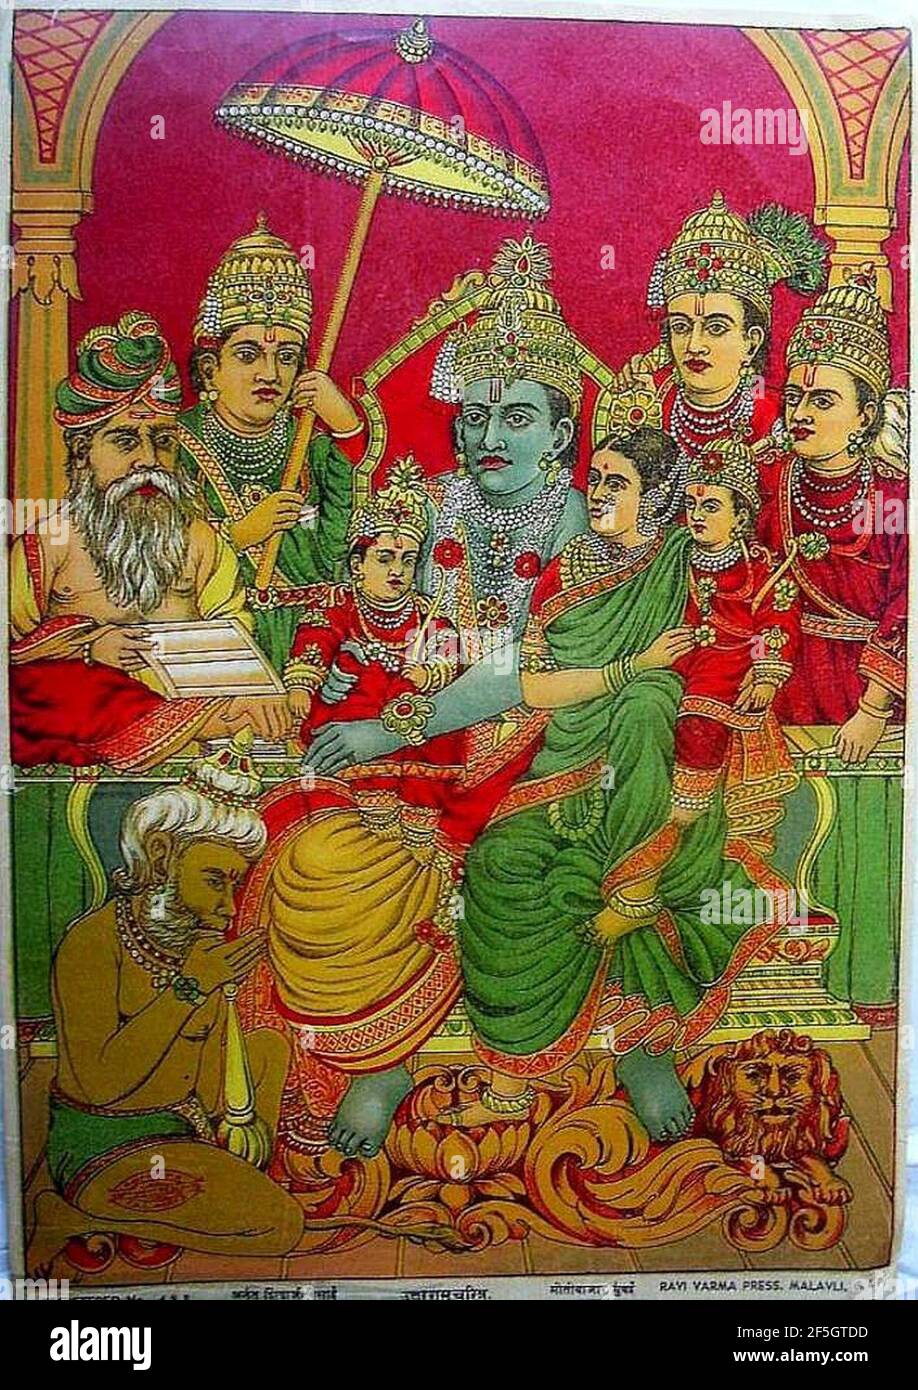 VISHNU ART | Hanuman, Lord rama images, Hanumanji